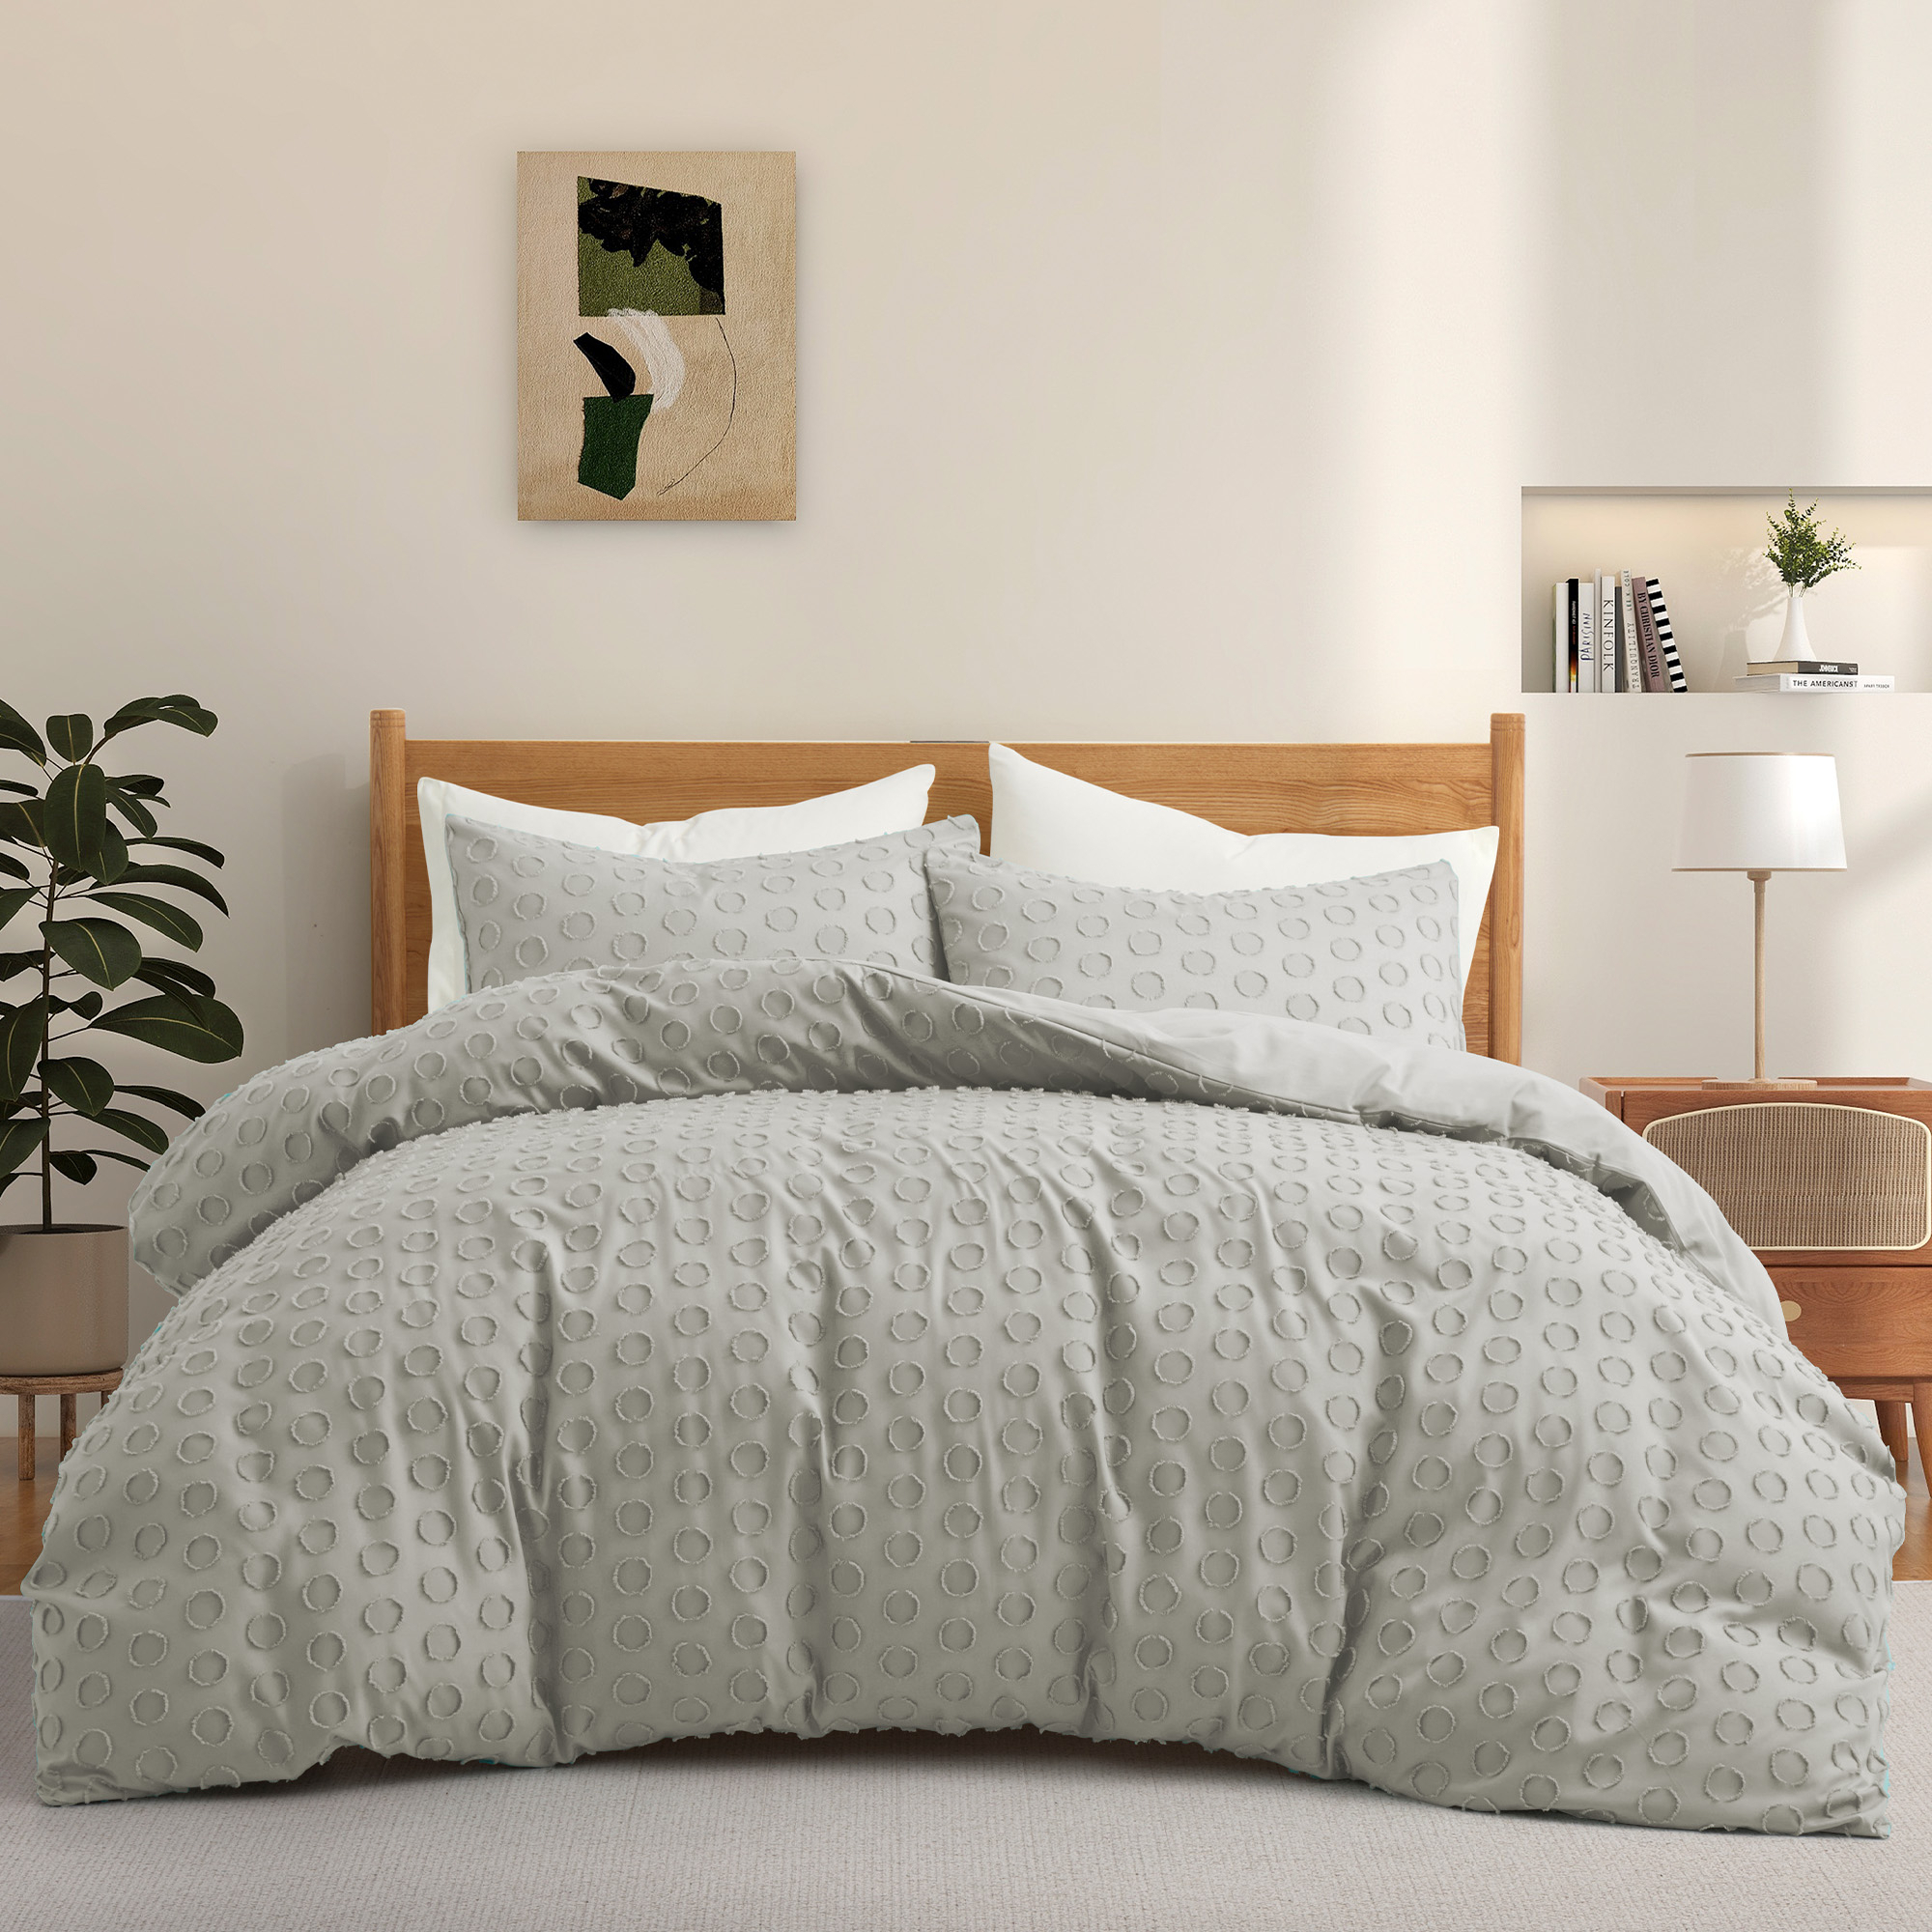 Luxury Bedding Soft Microfiber Duvet Cover And Sham Set - Light Grey, Twin